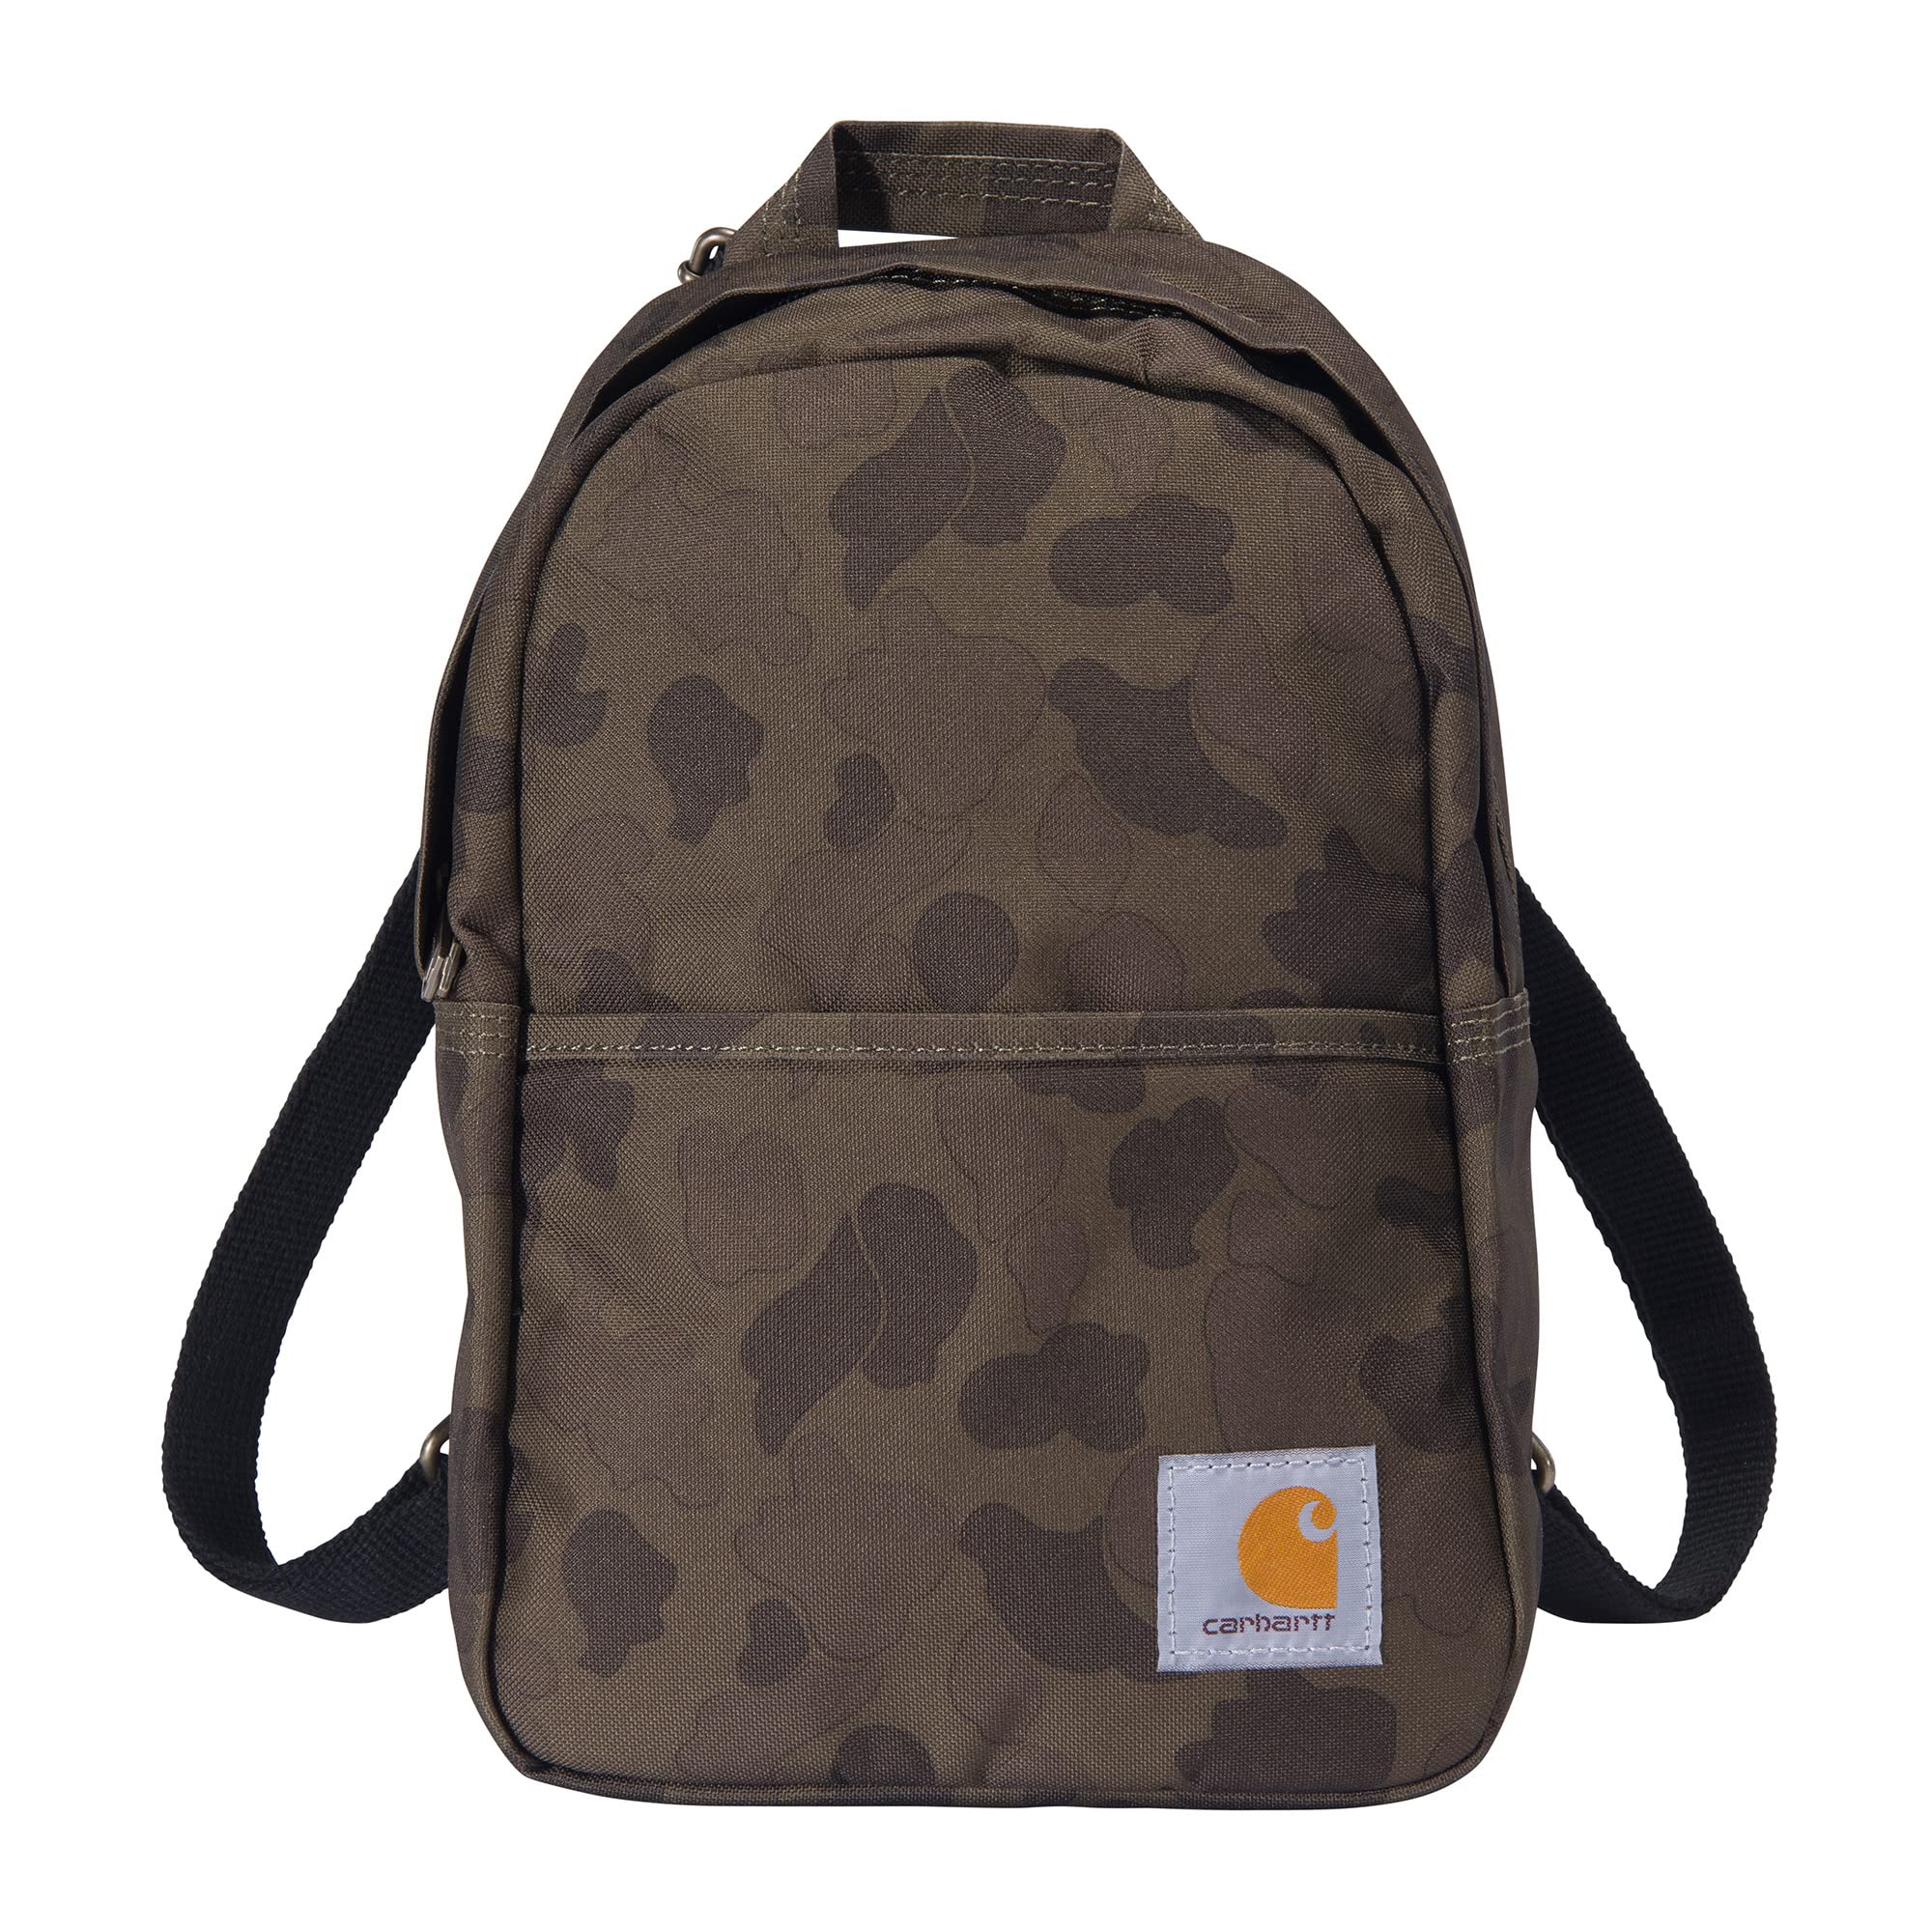 Carhartt - 8922130120 Mini Backpack, Duck Camo, One Size